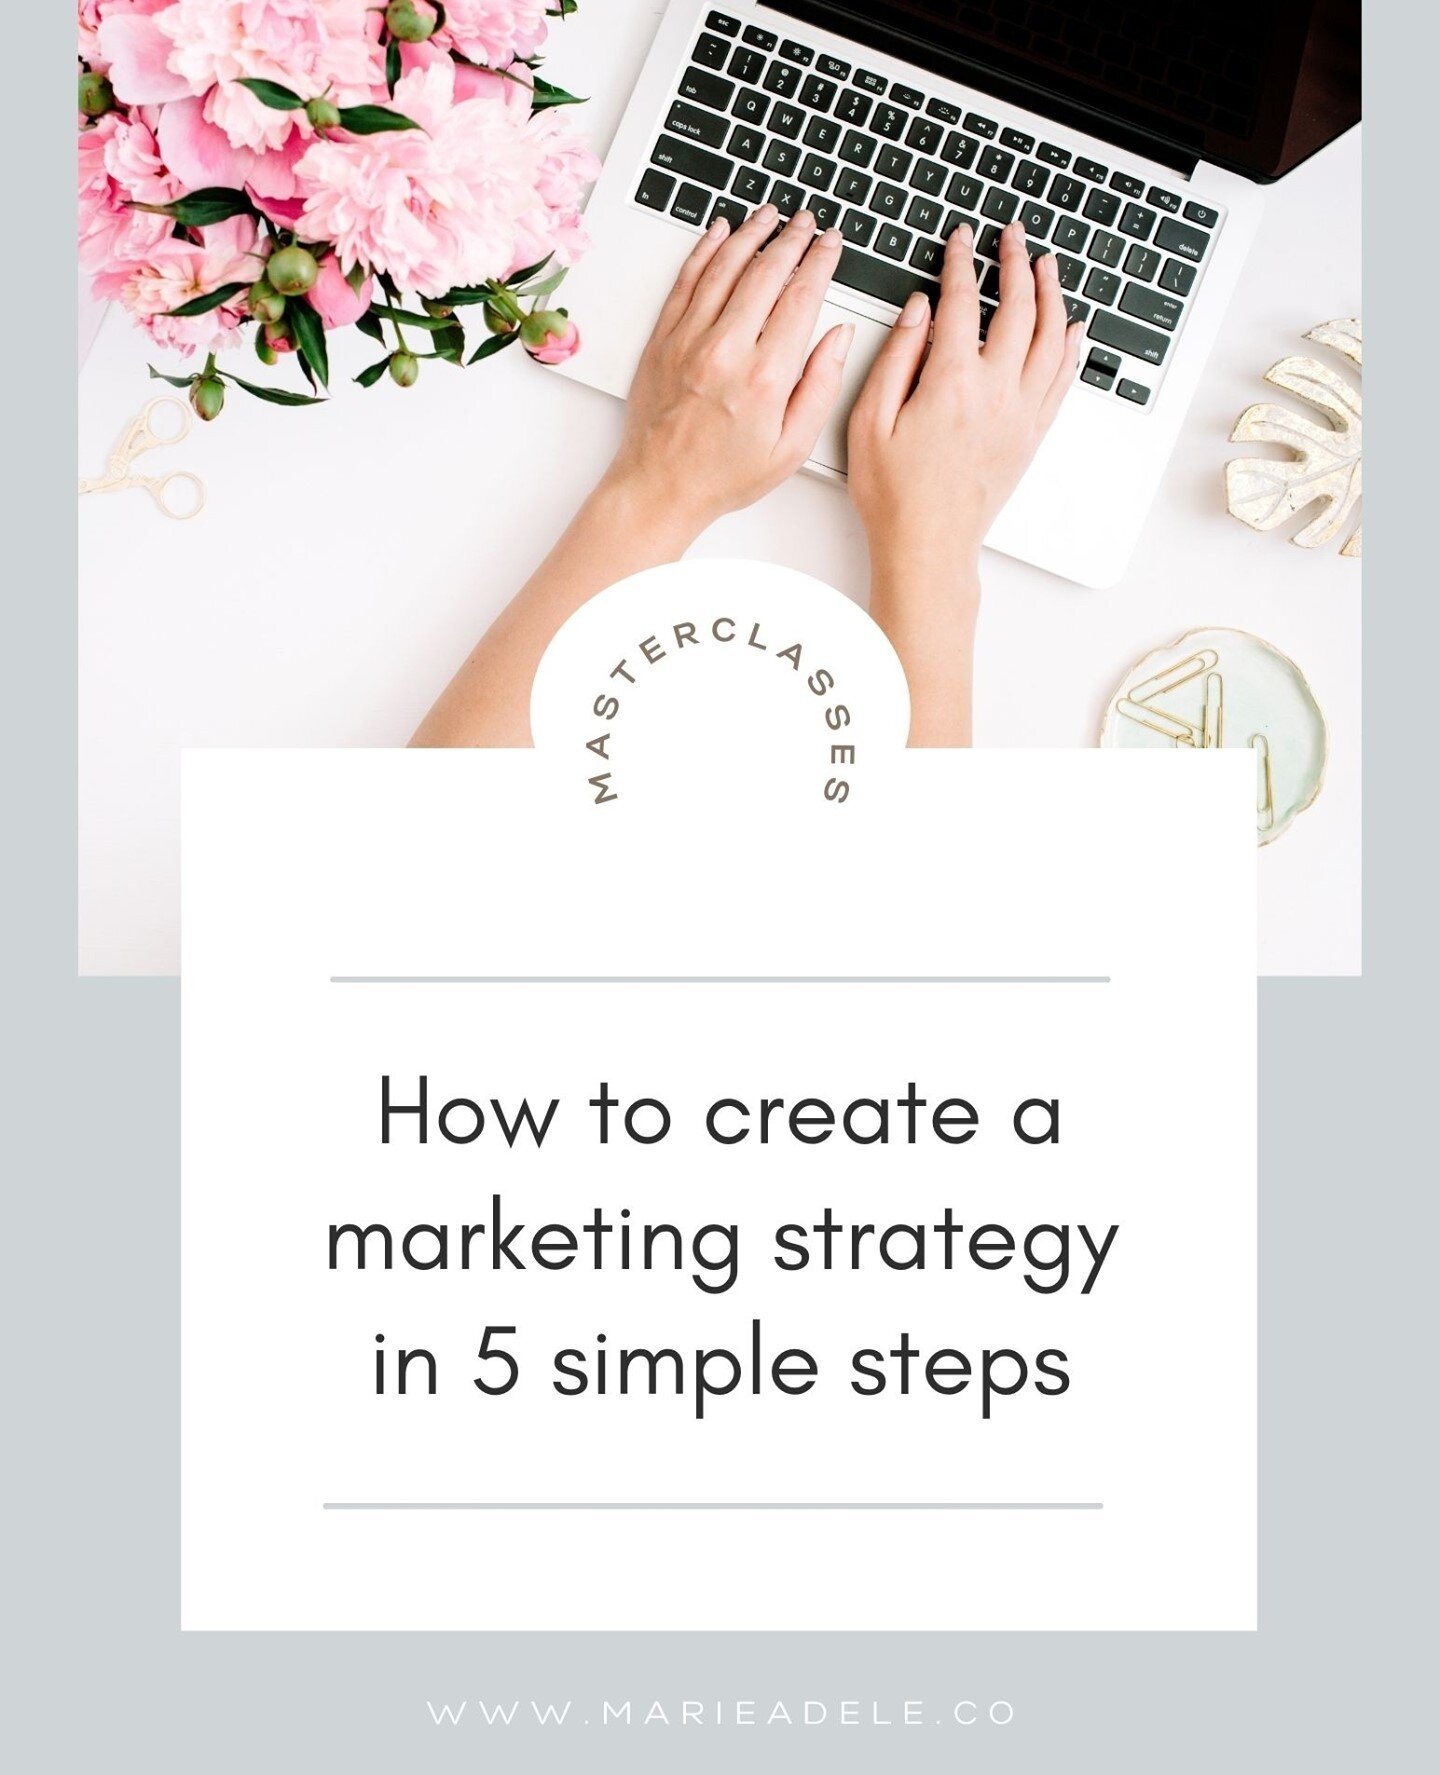 For our free 5 step marketing strategies.⁠
email us:- hello@marieadele.com.au⁠
#marieadeleco #marketingstrategy #free